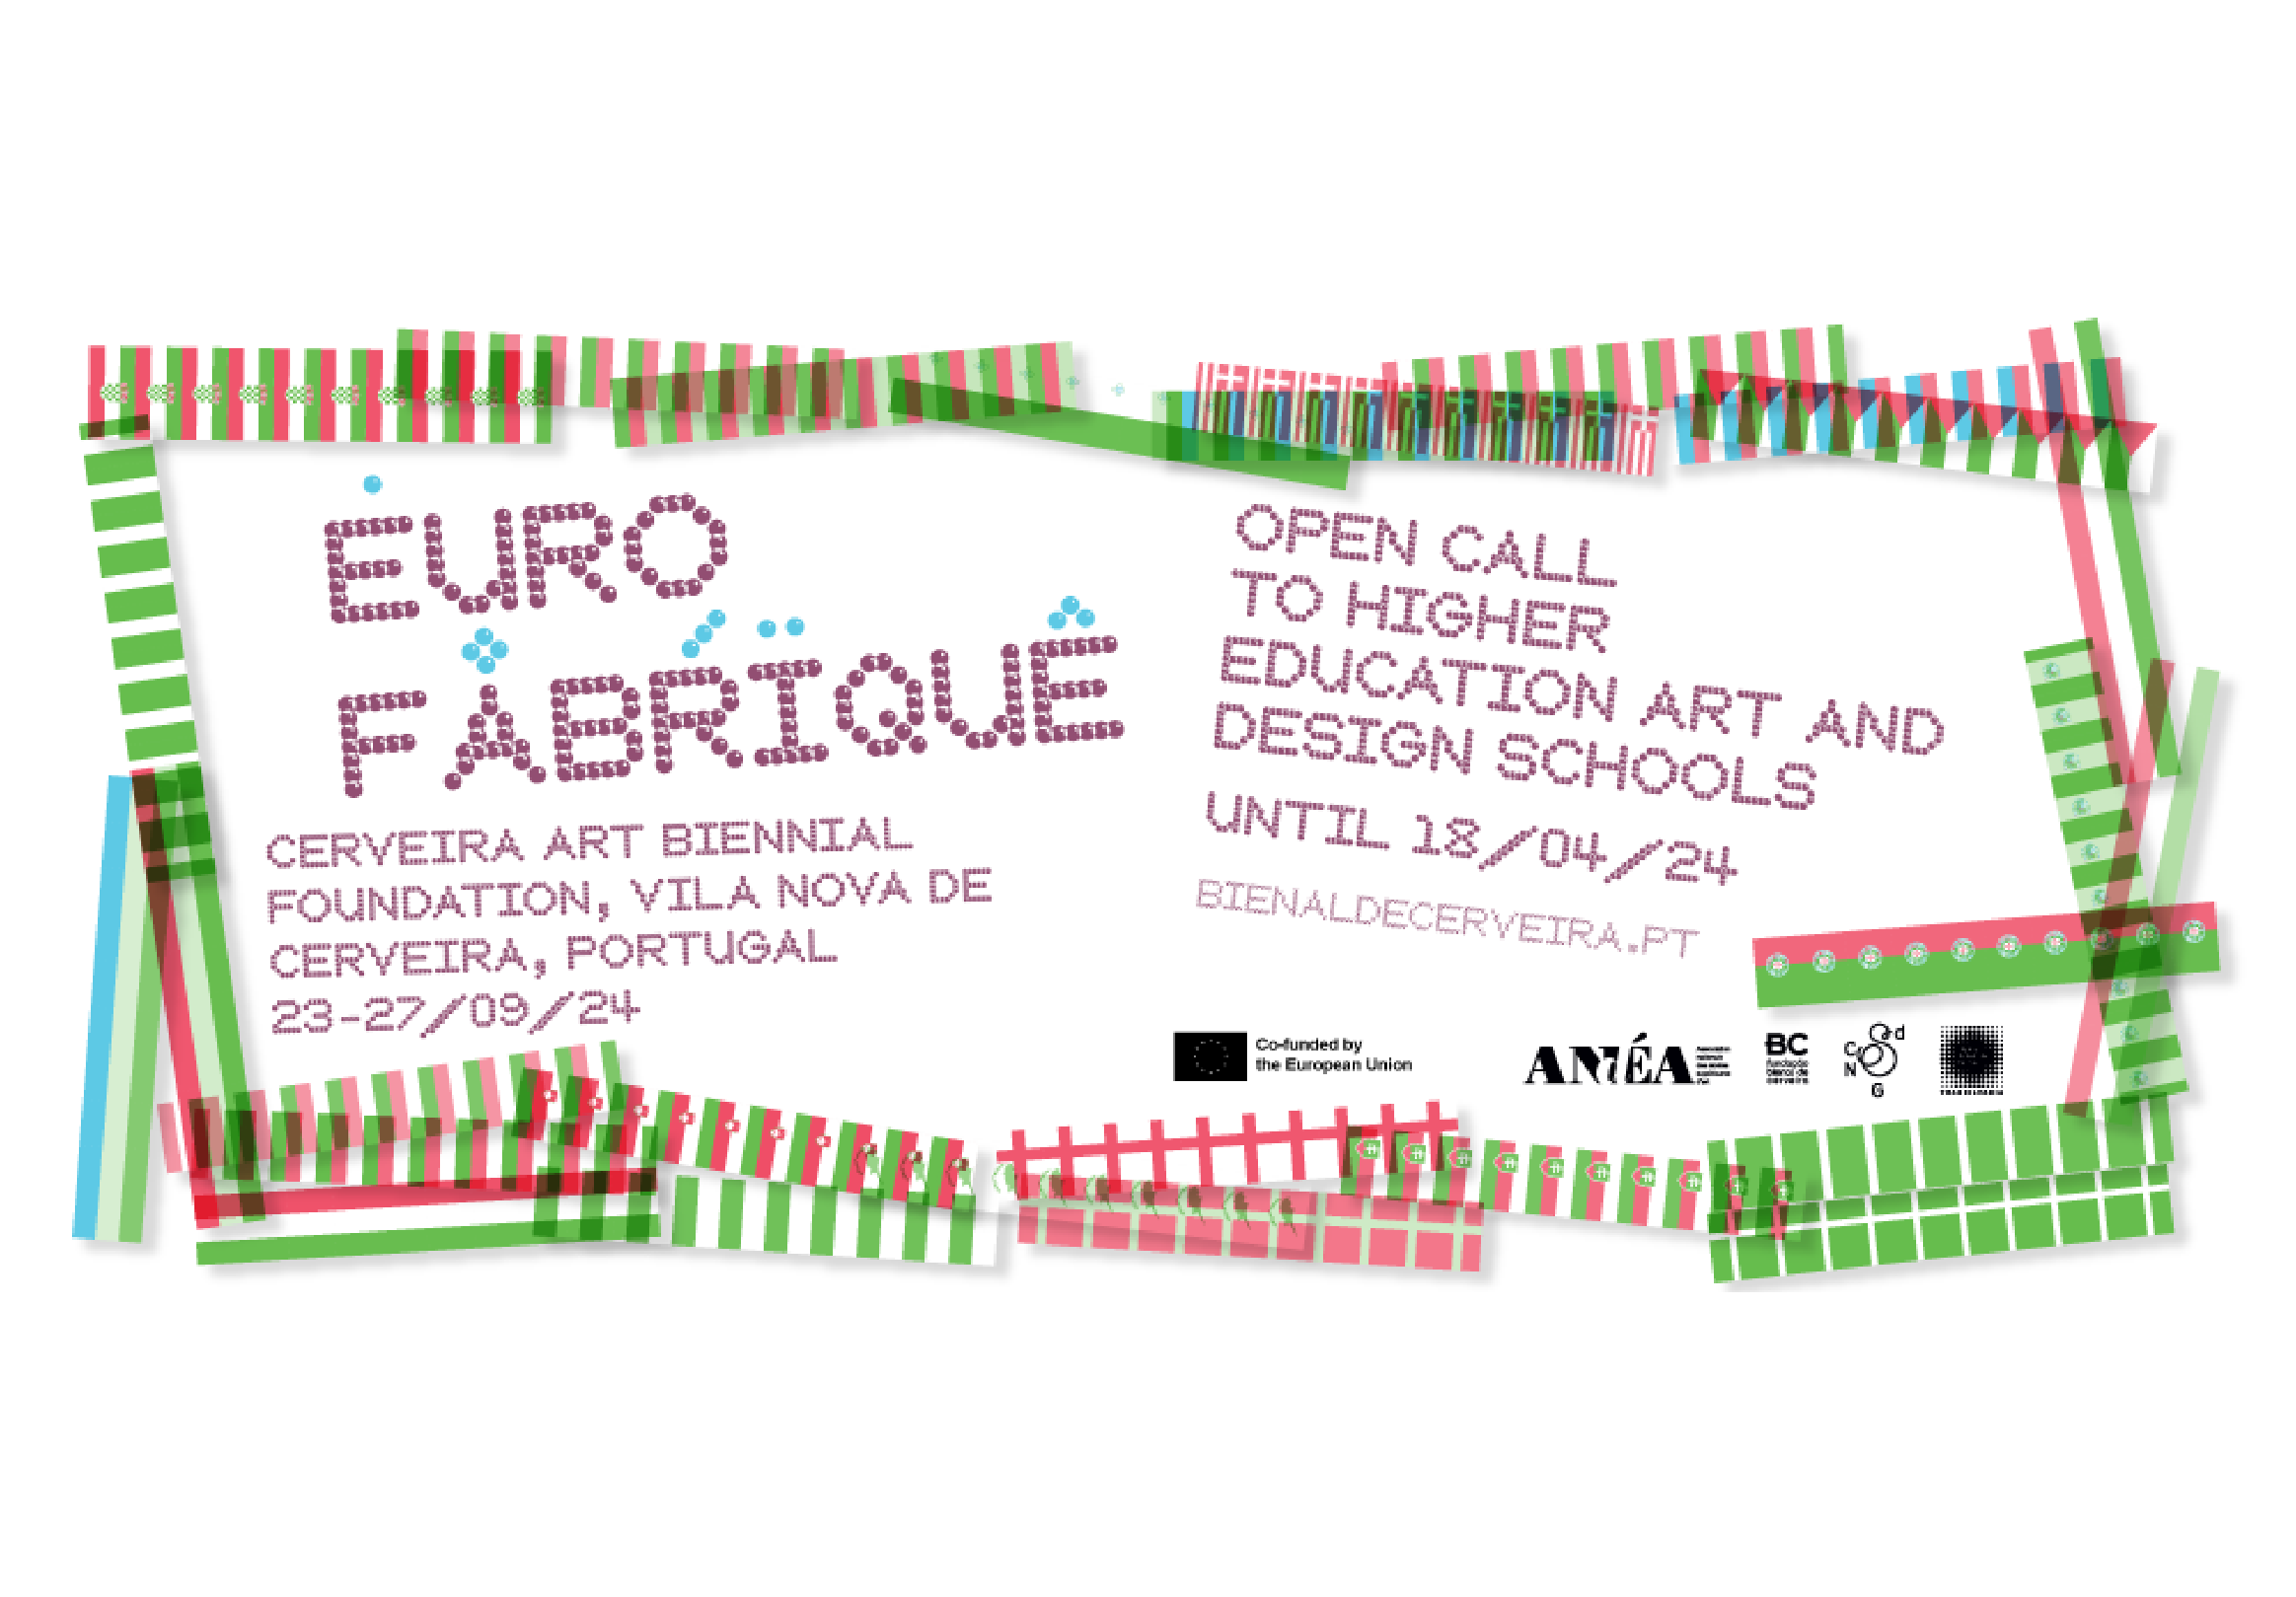 EuroFabrique Art Camp